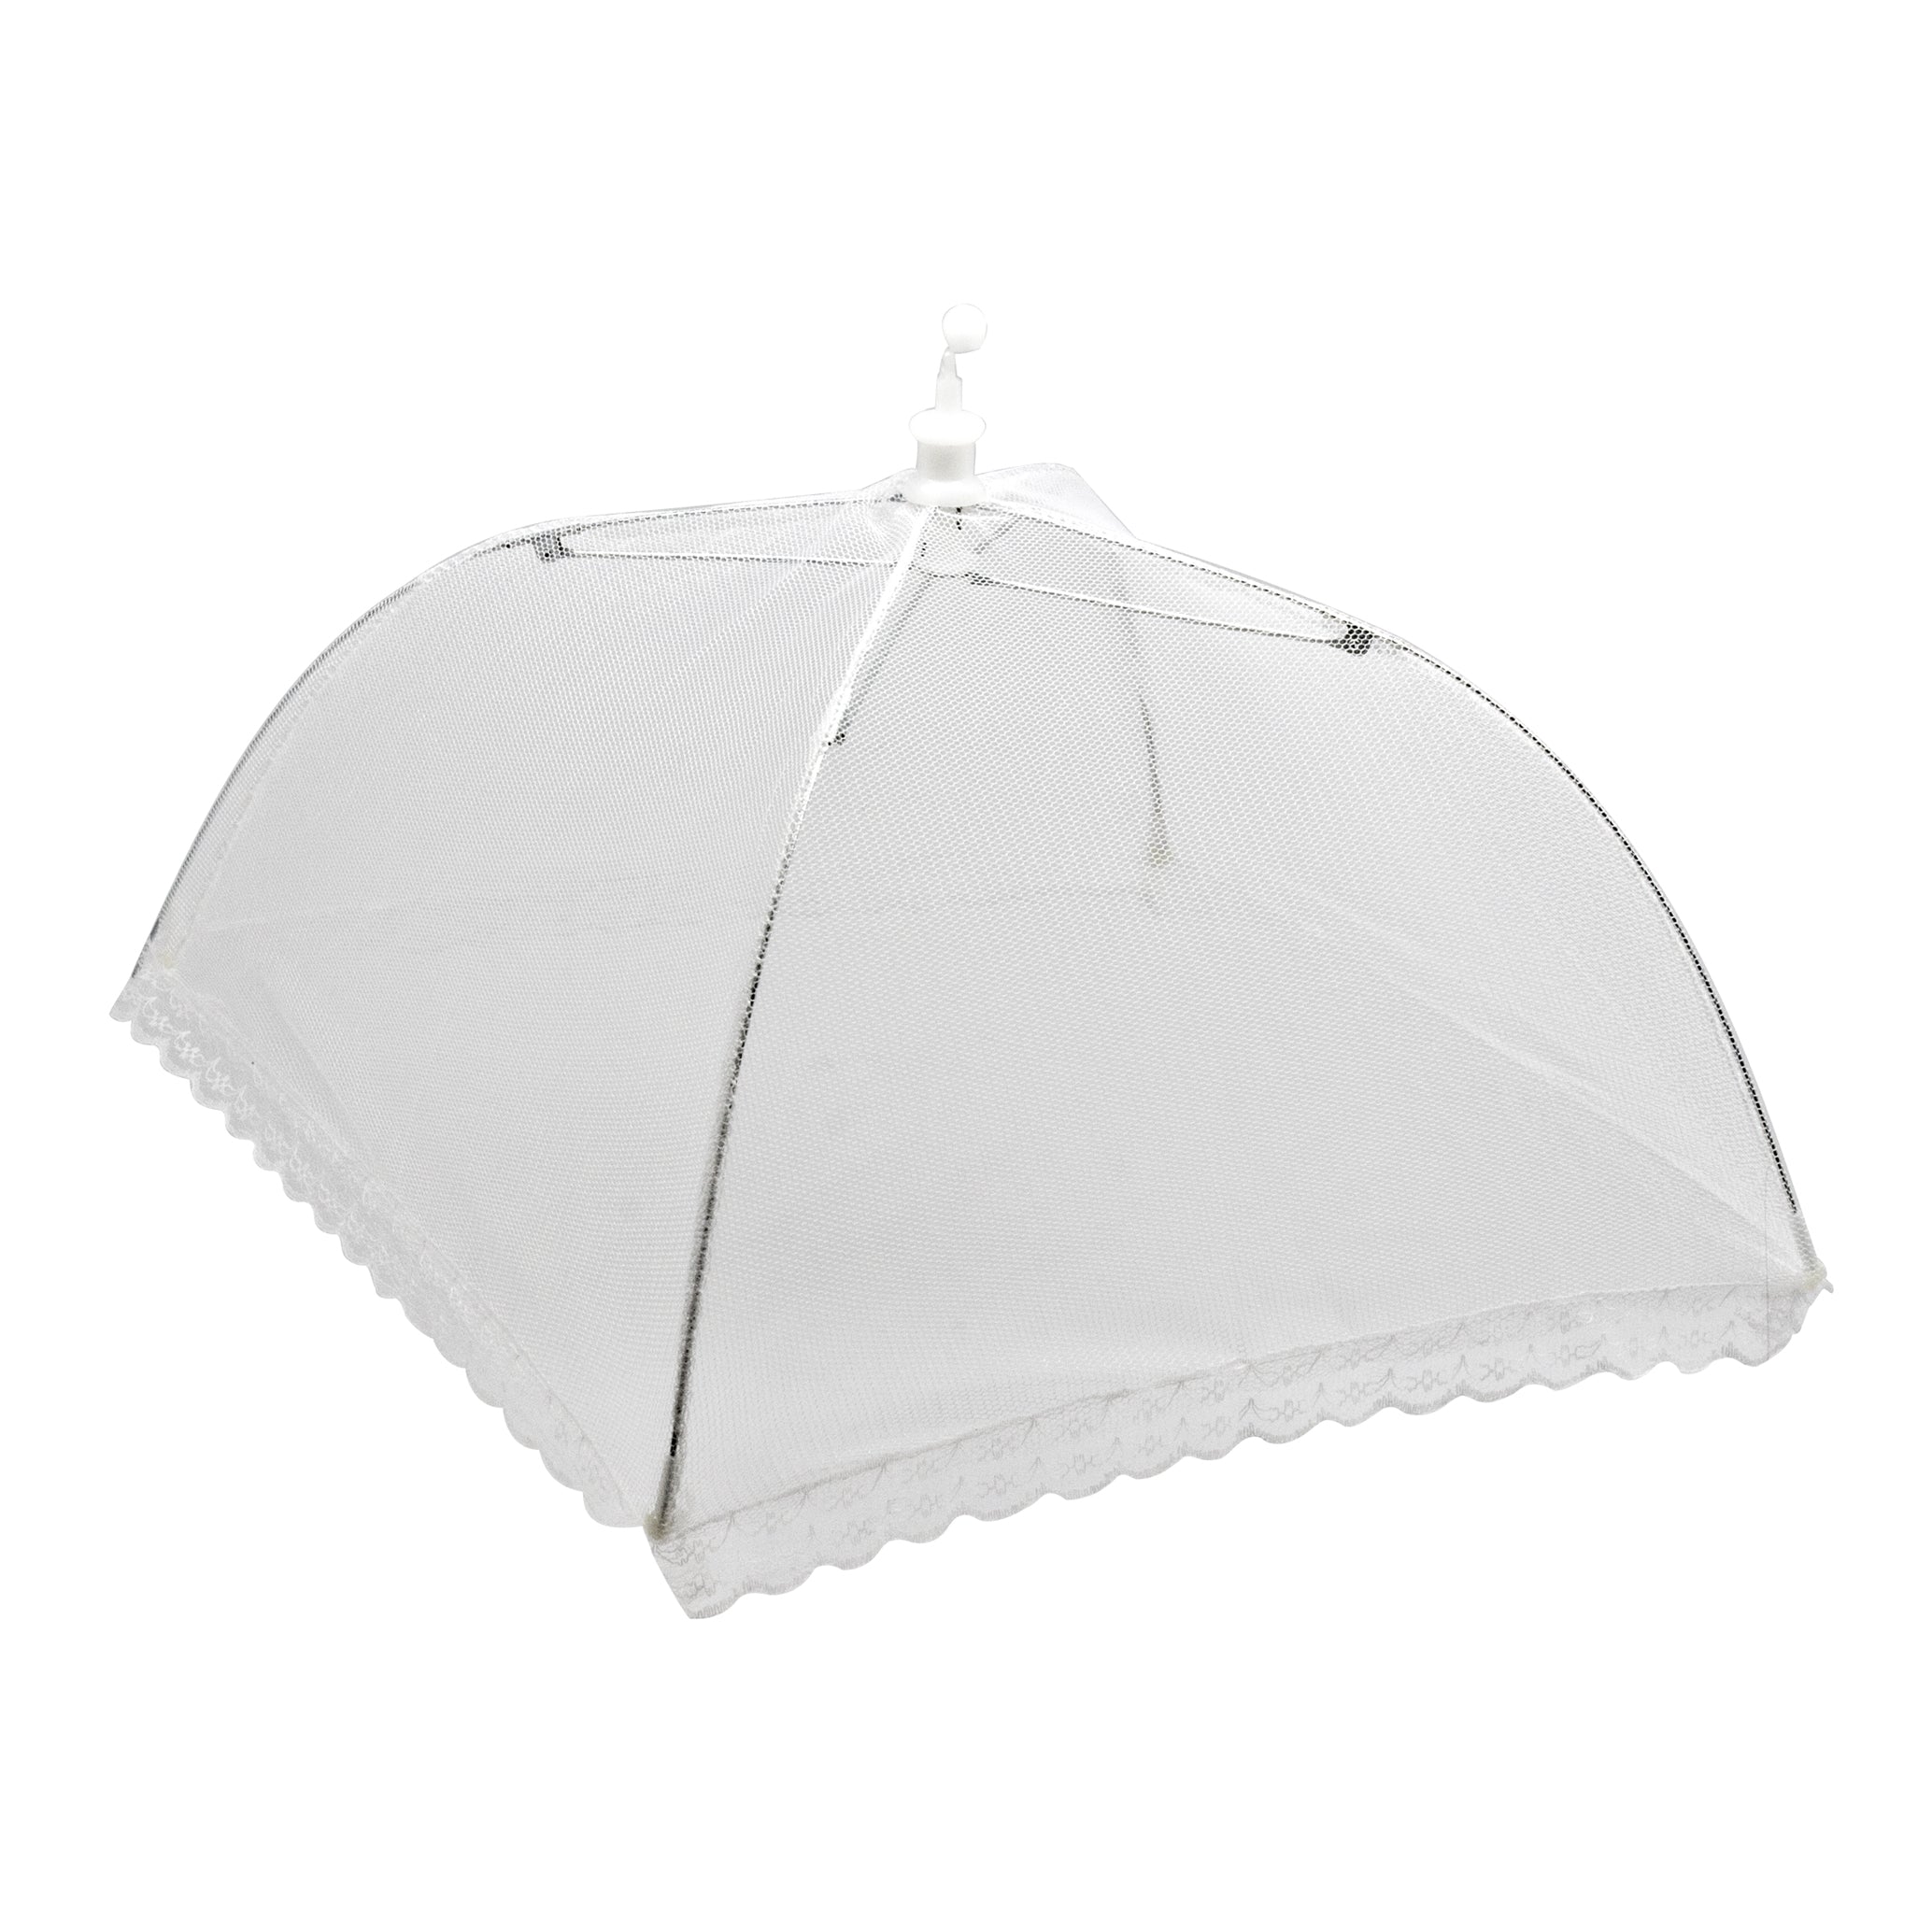 Umbrella Food Cover - White - 33 x 33 x 14 cm